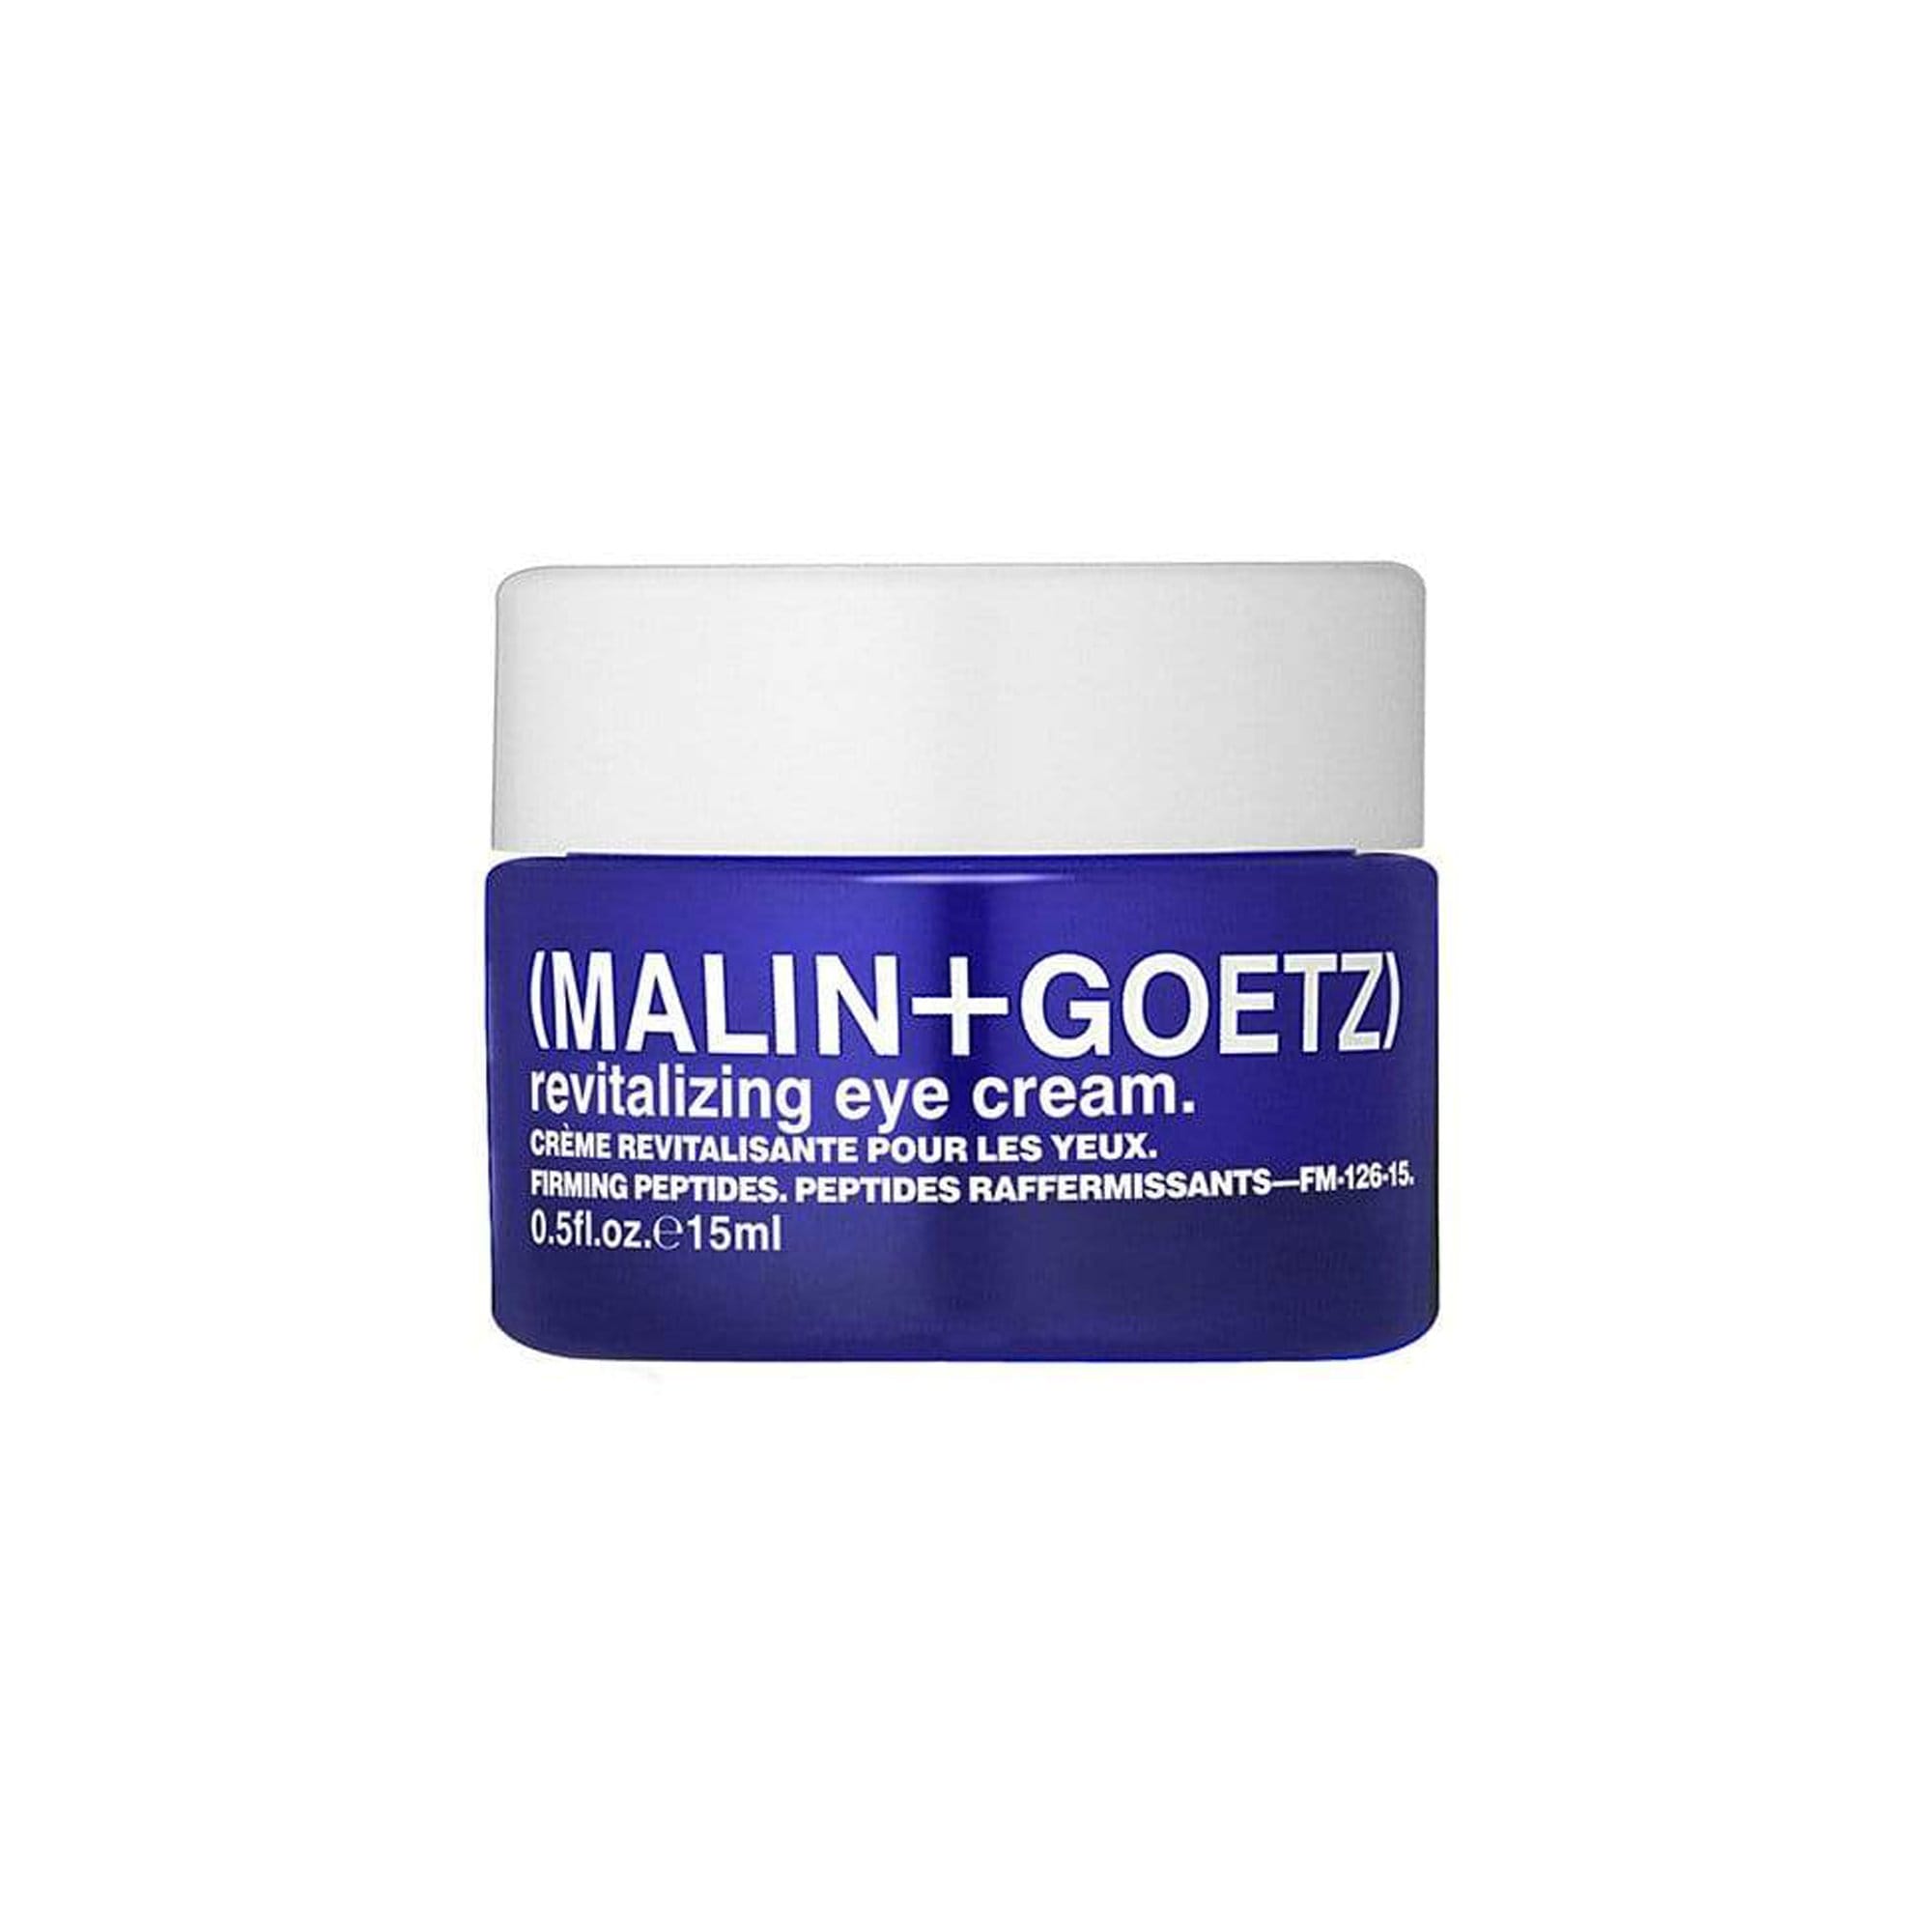 Revitalizing Eye Cream (MALIN+GOETZ) Revitalizing Eye Contour Cream